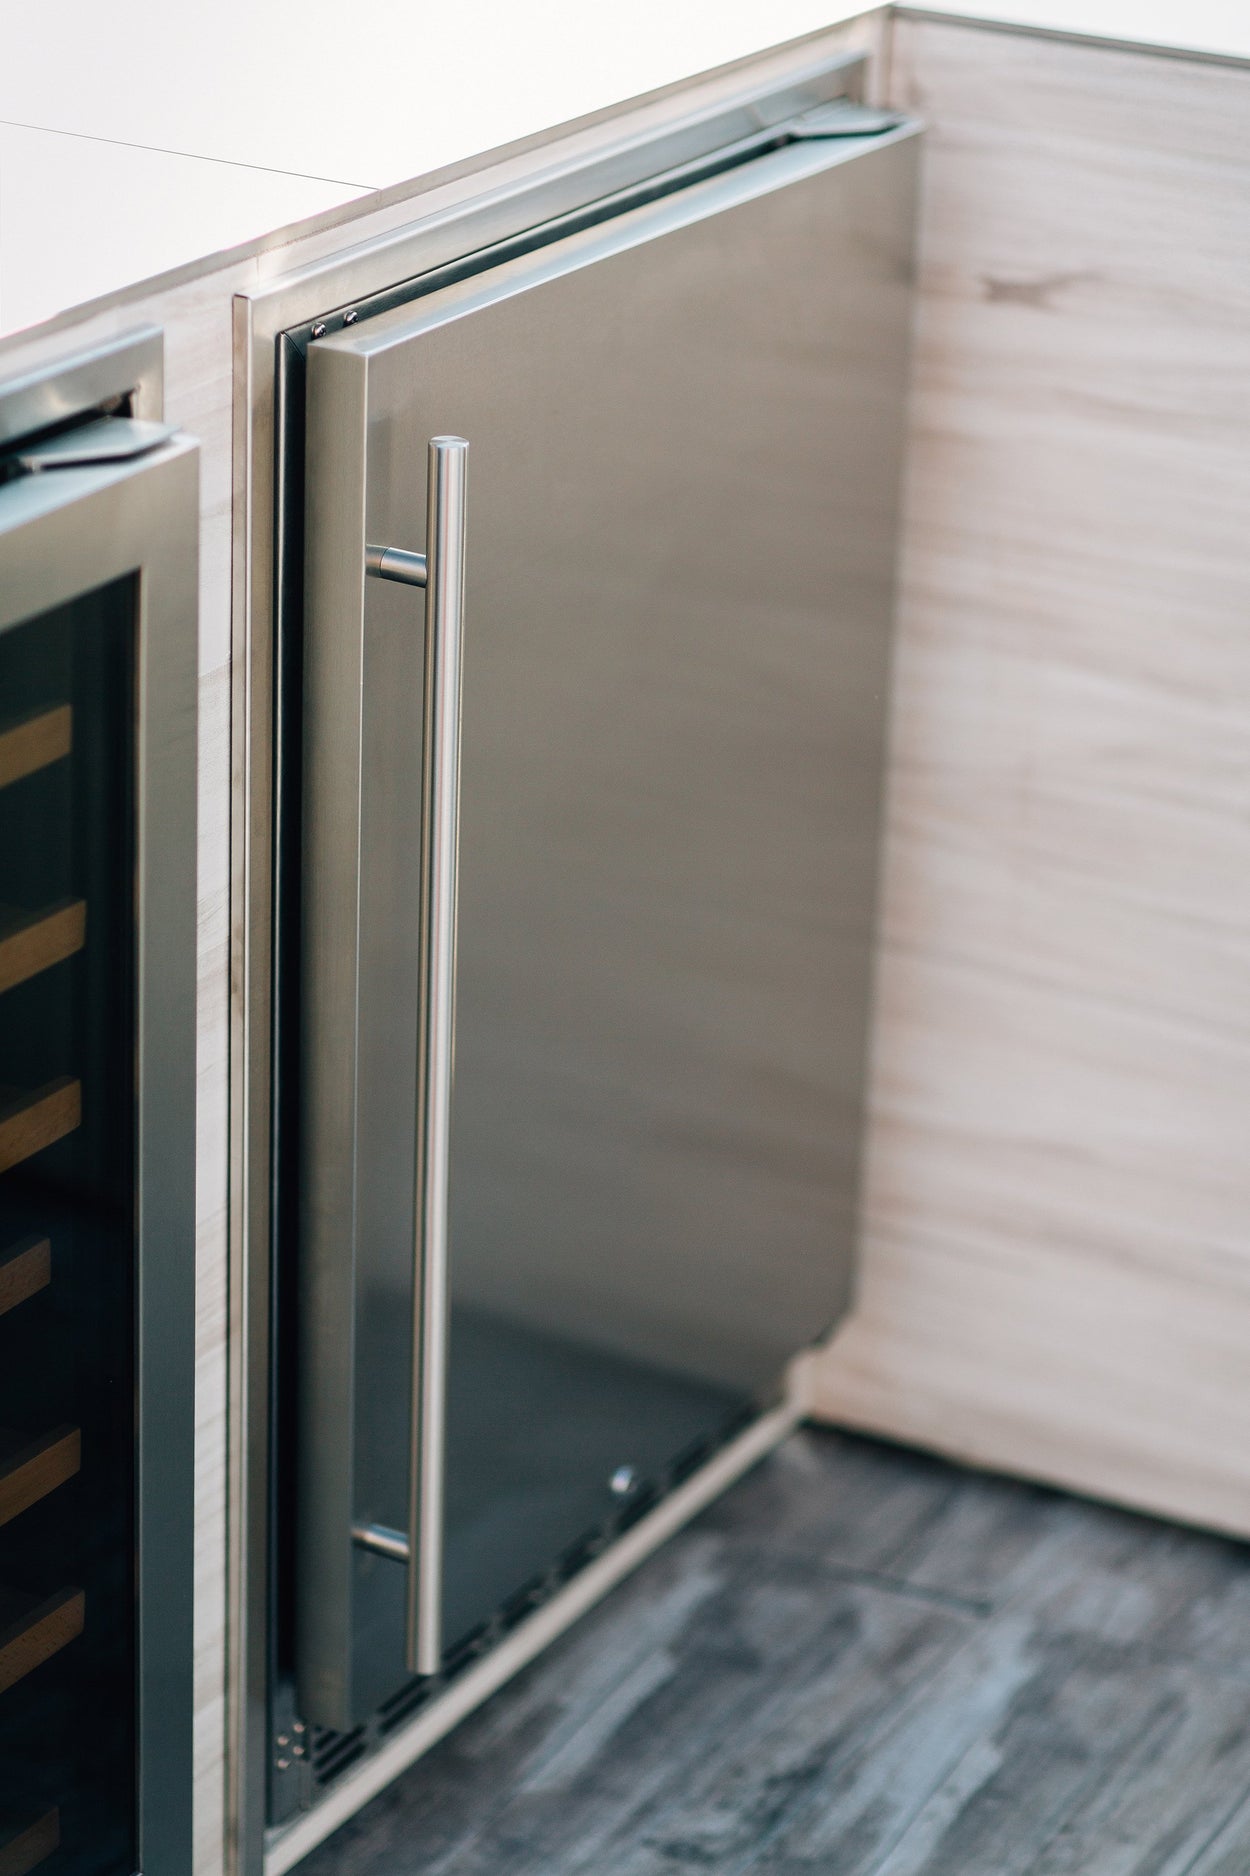 24 5.3c Deluxe Outdoor Rated Refrigerator — SunFire Grills